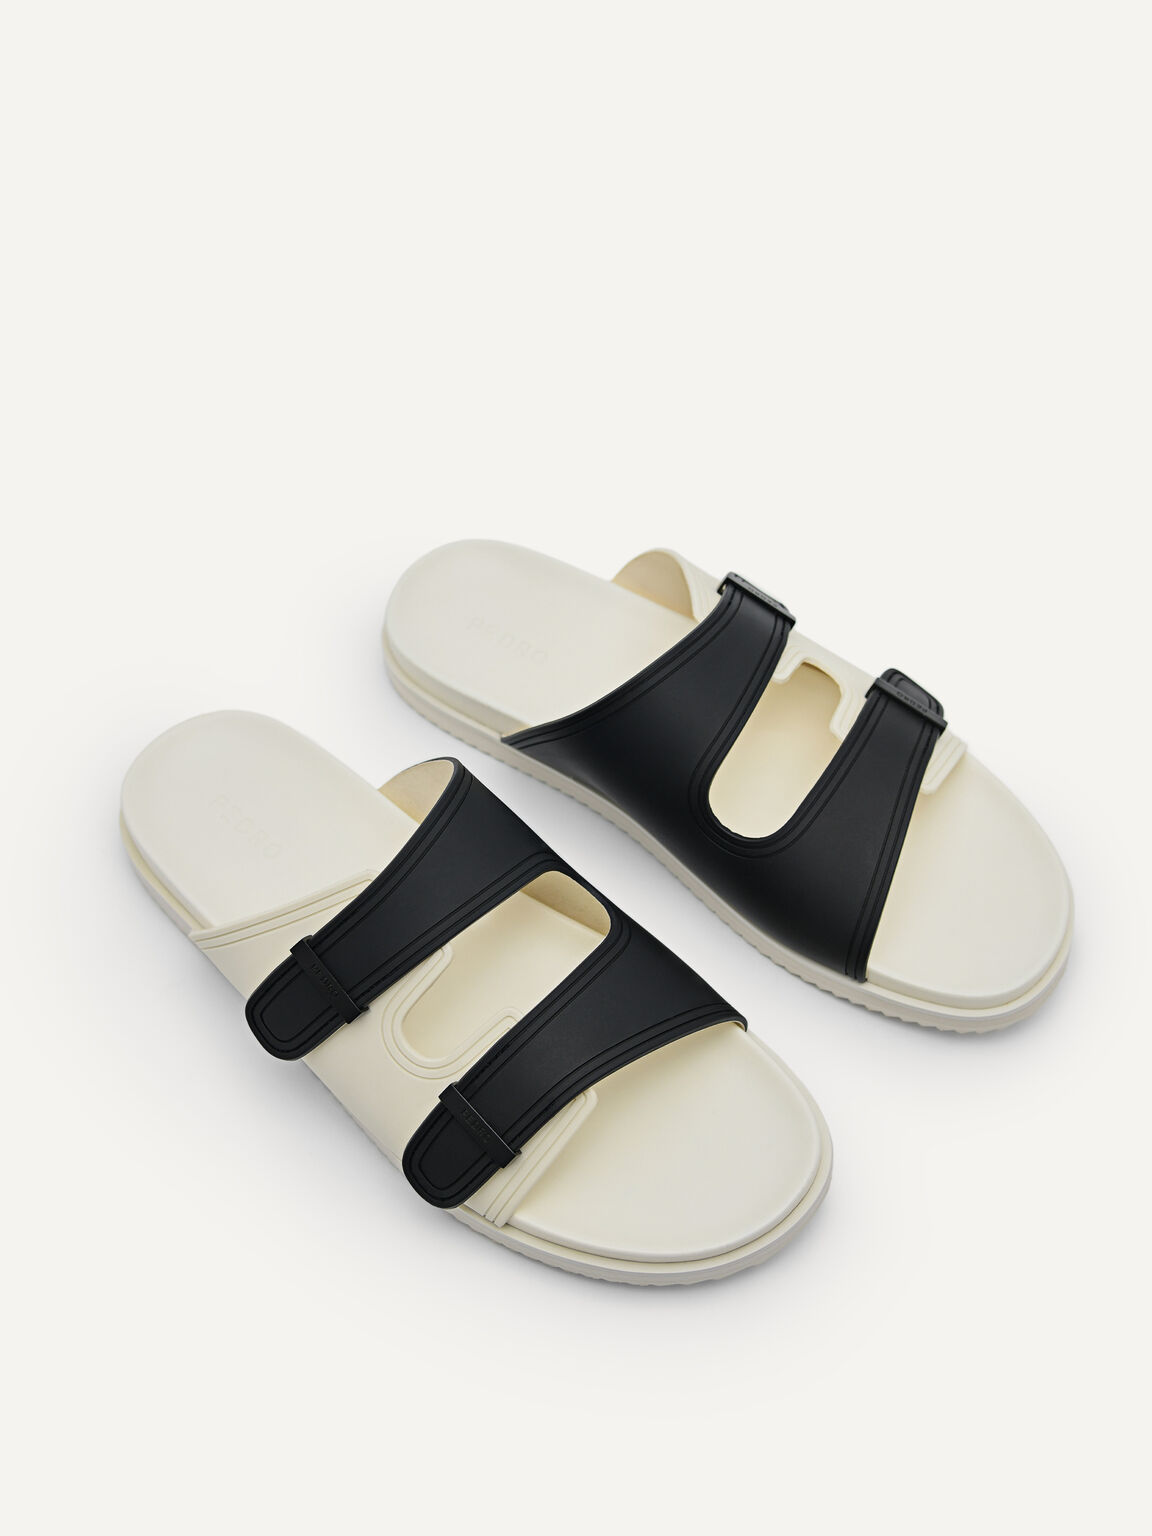 Rubber Double-strap Walking Sandals, Black